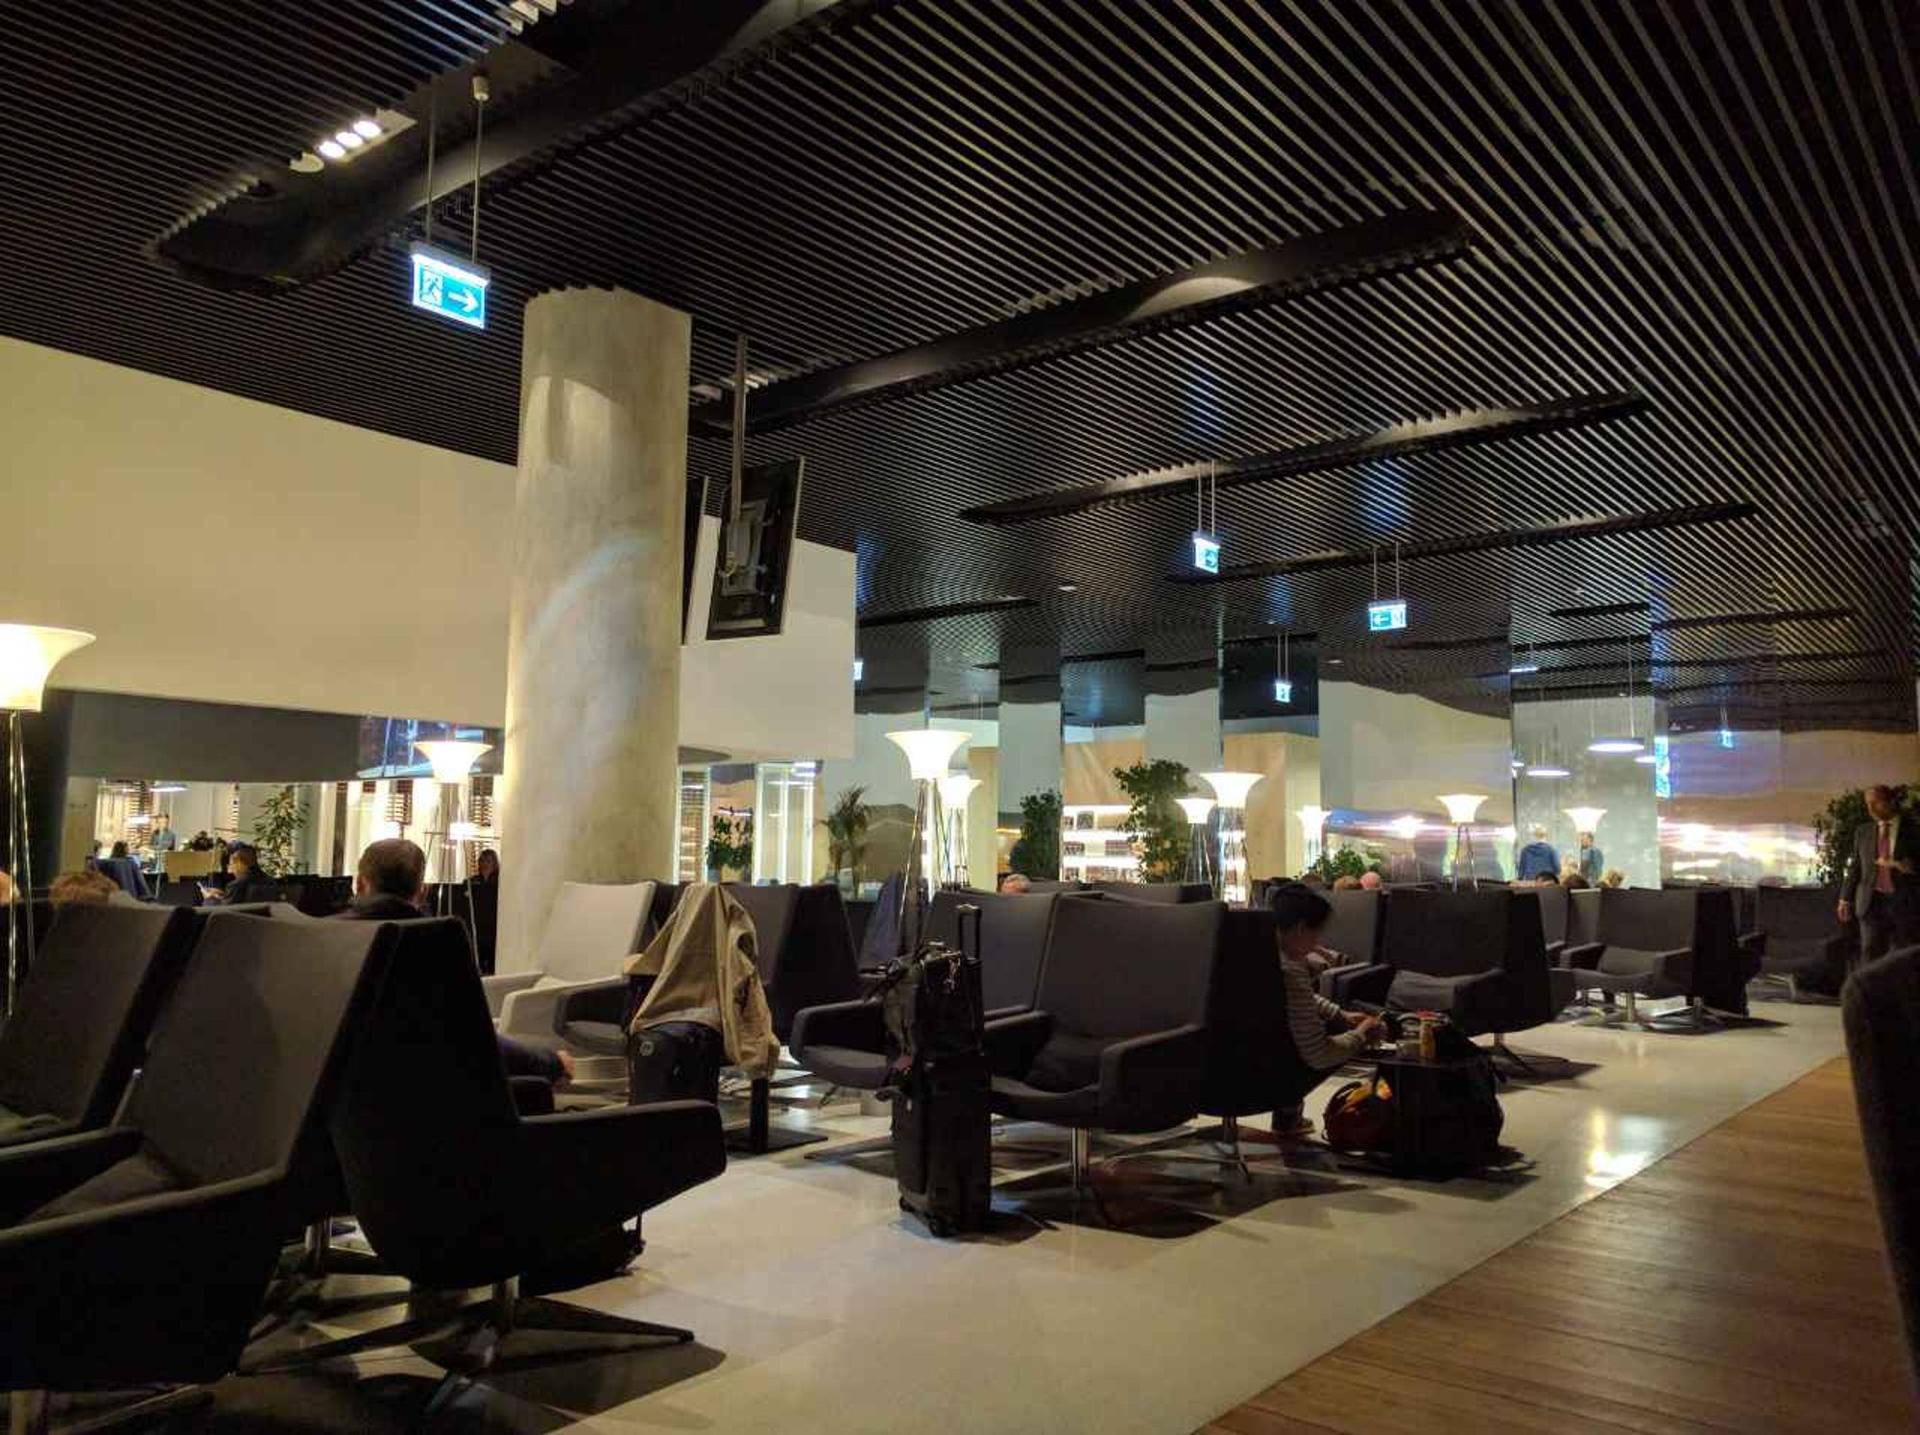 ANA Airport Lounge image 22 of 49